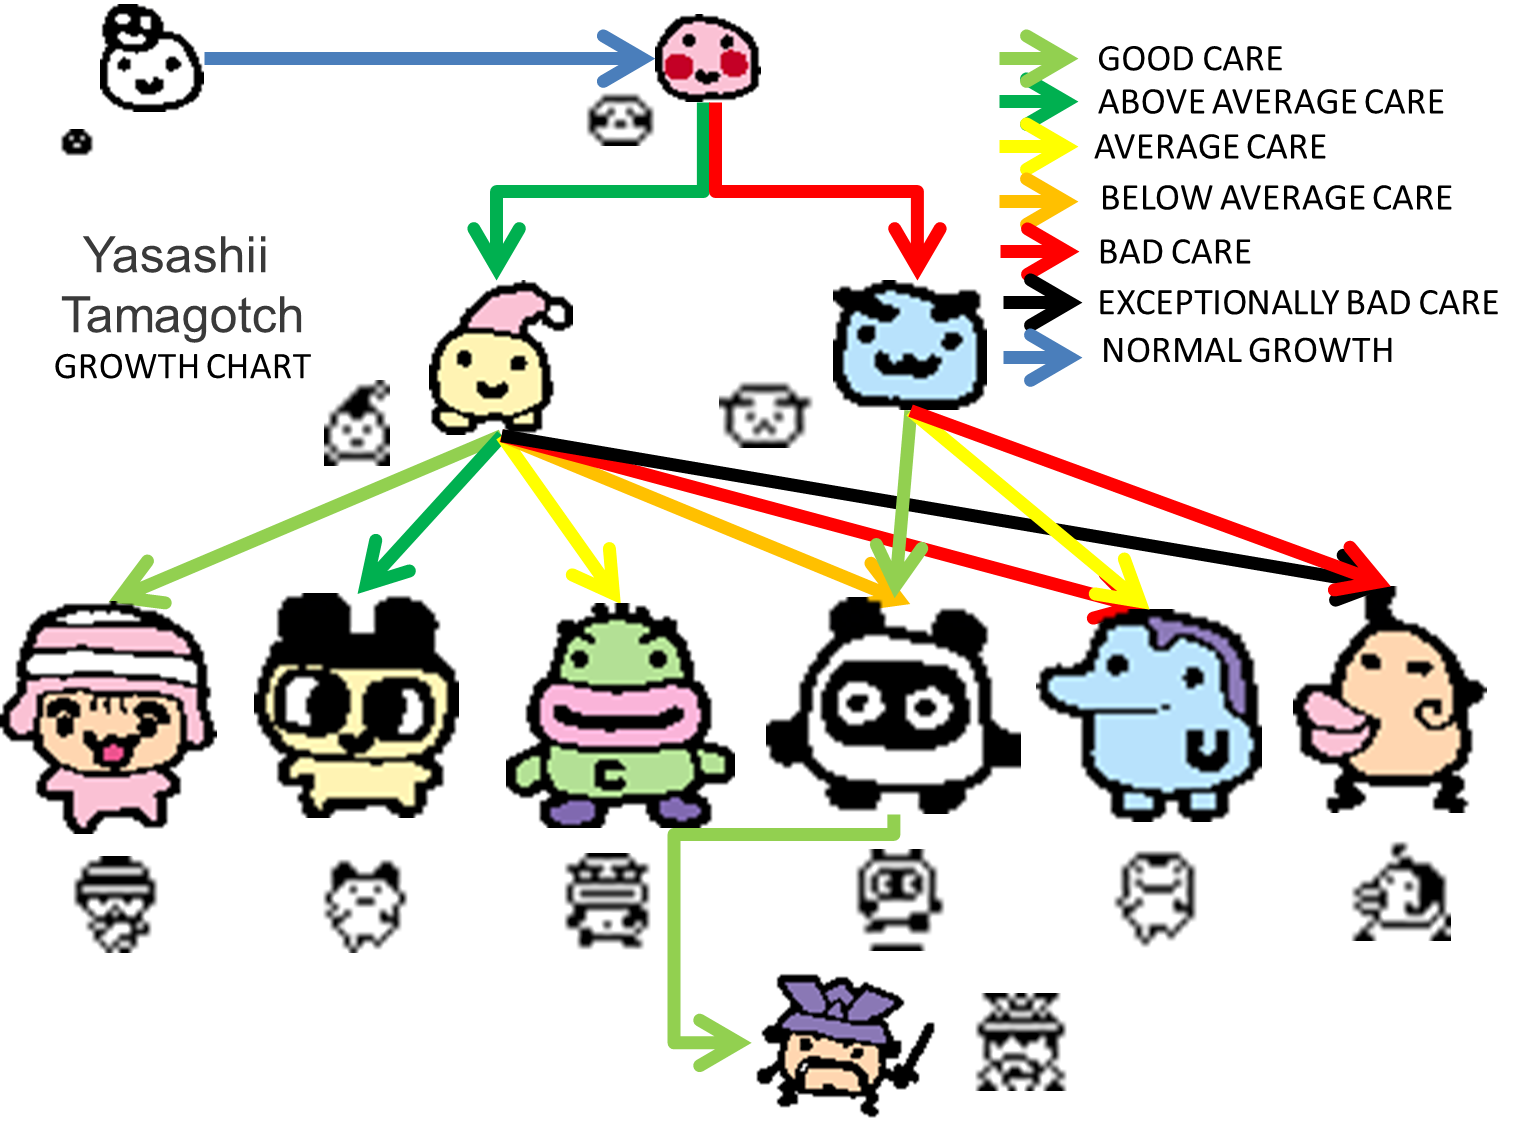 Tamagotchi Evolution Chart